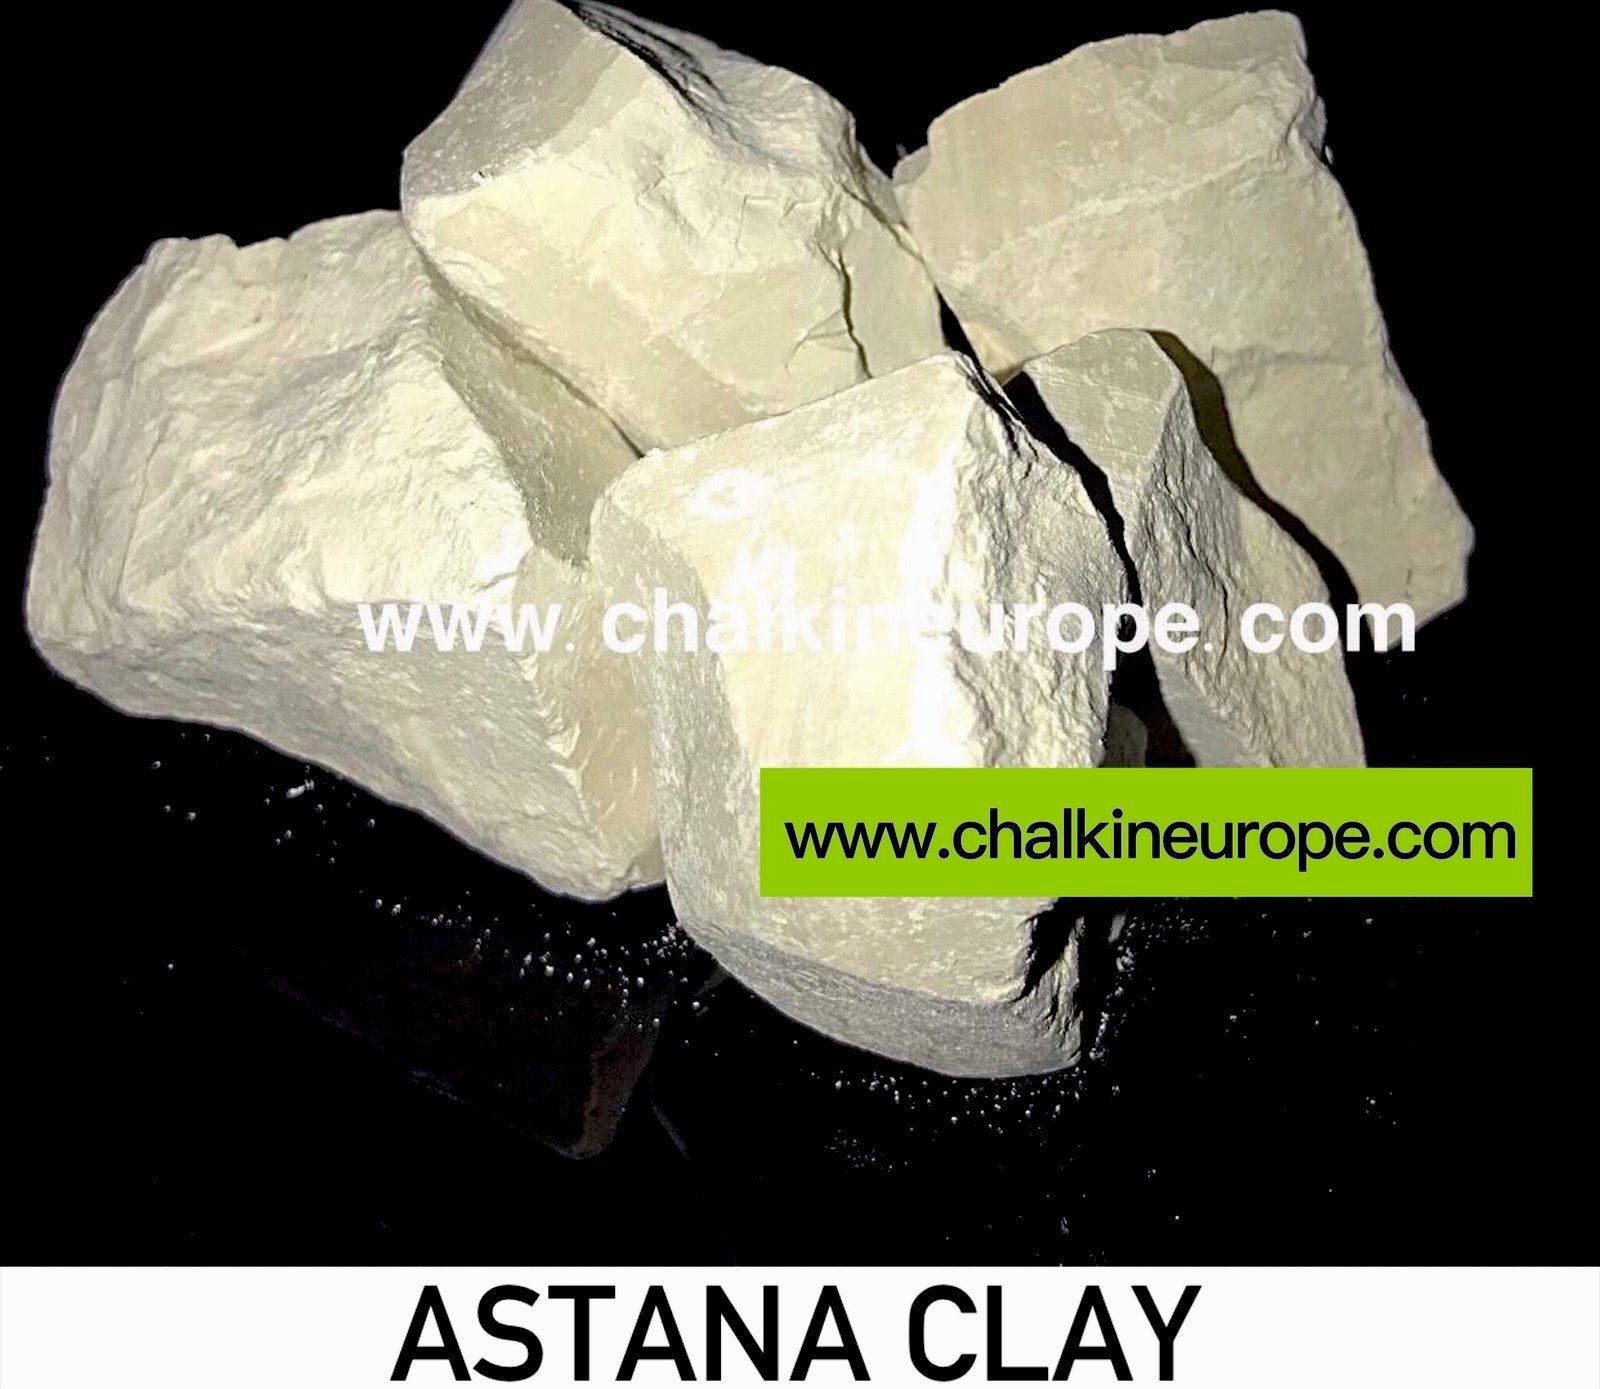 Astana Clay – Chalkineurope